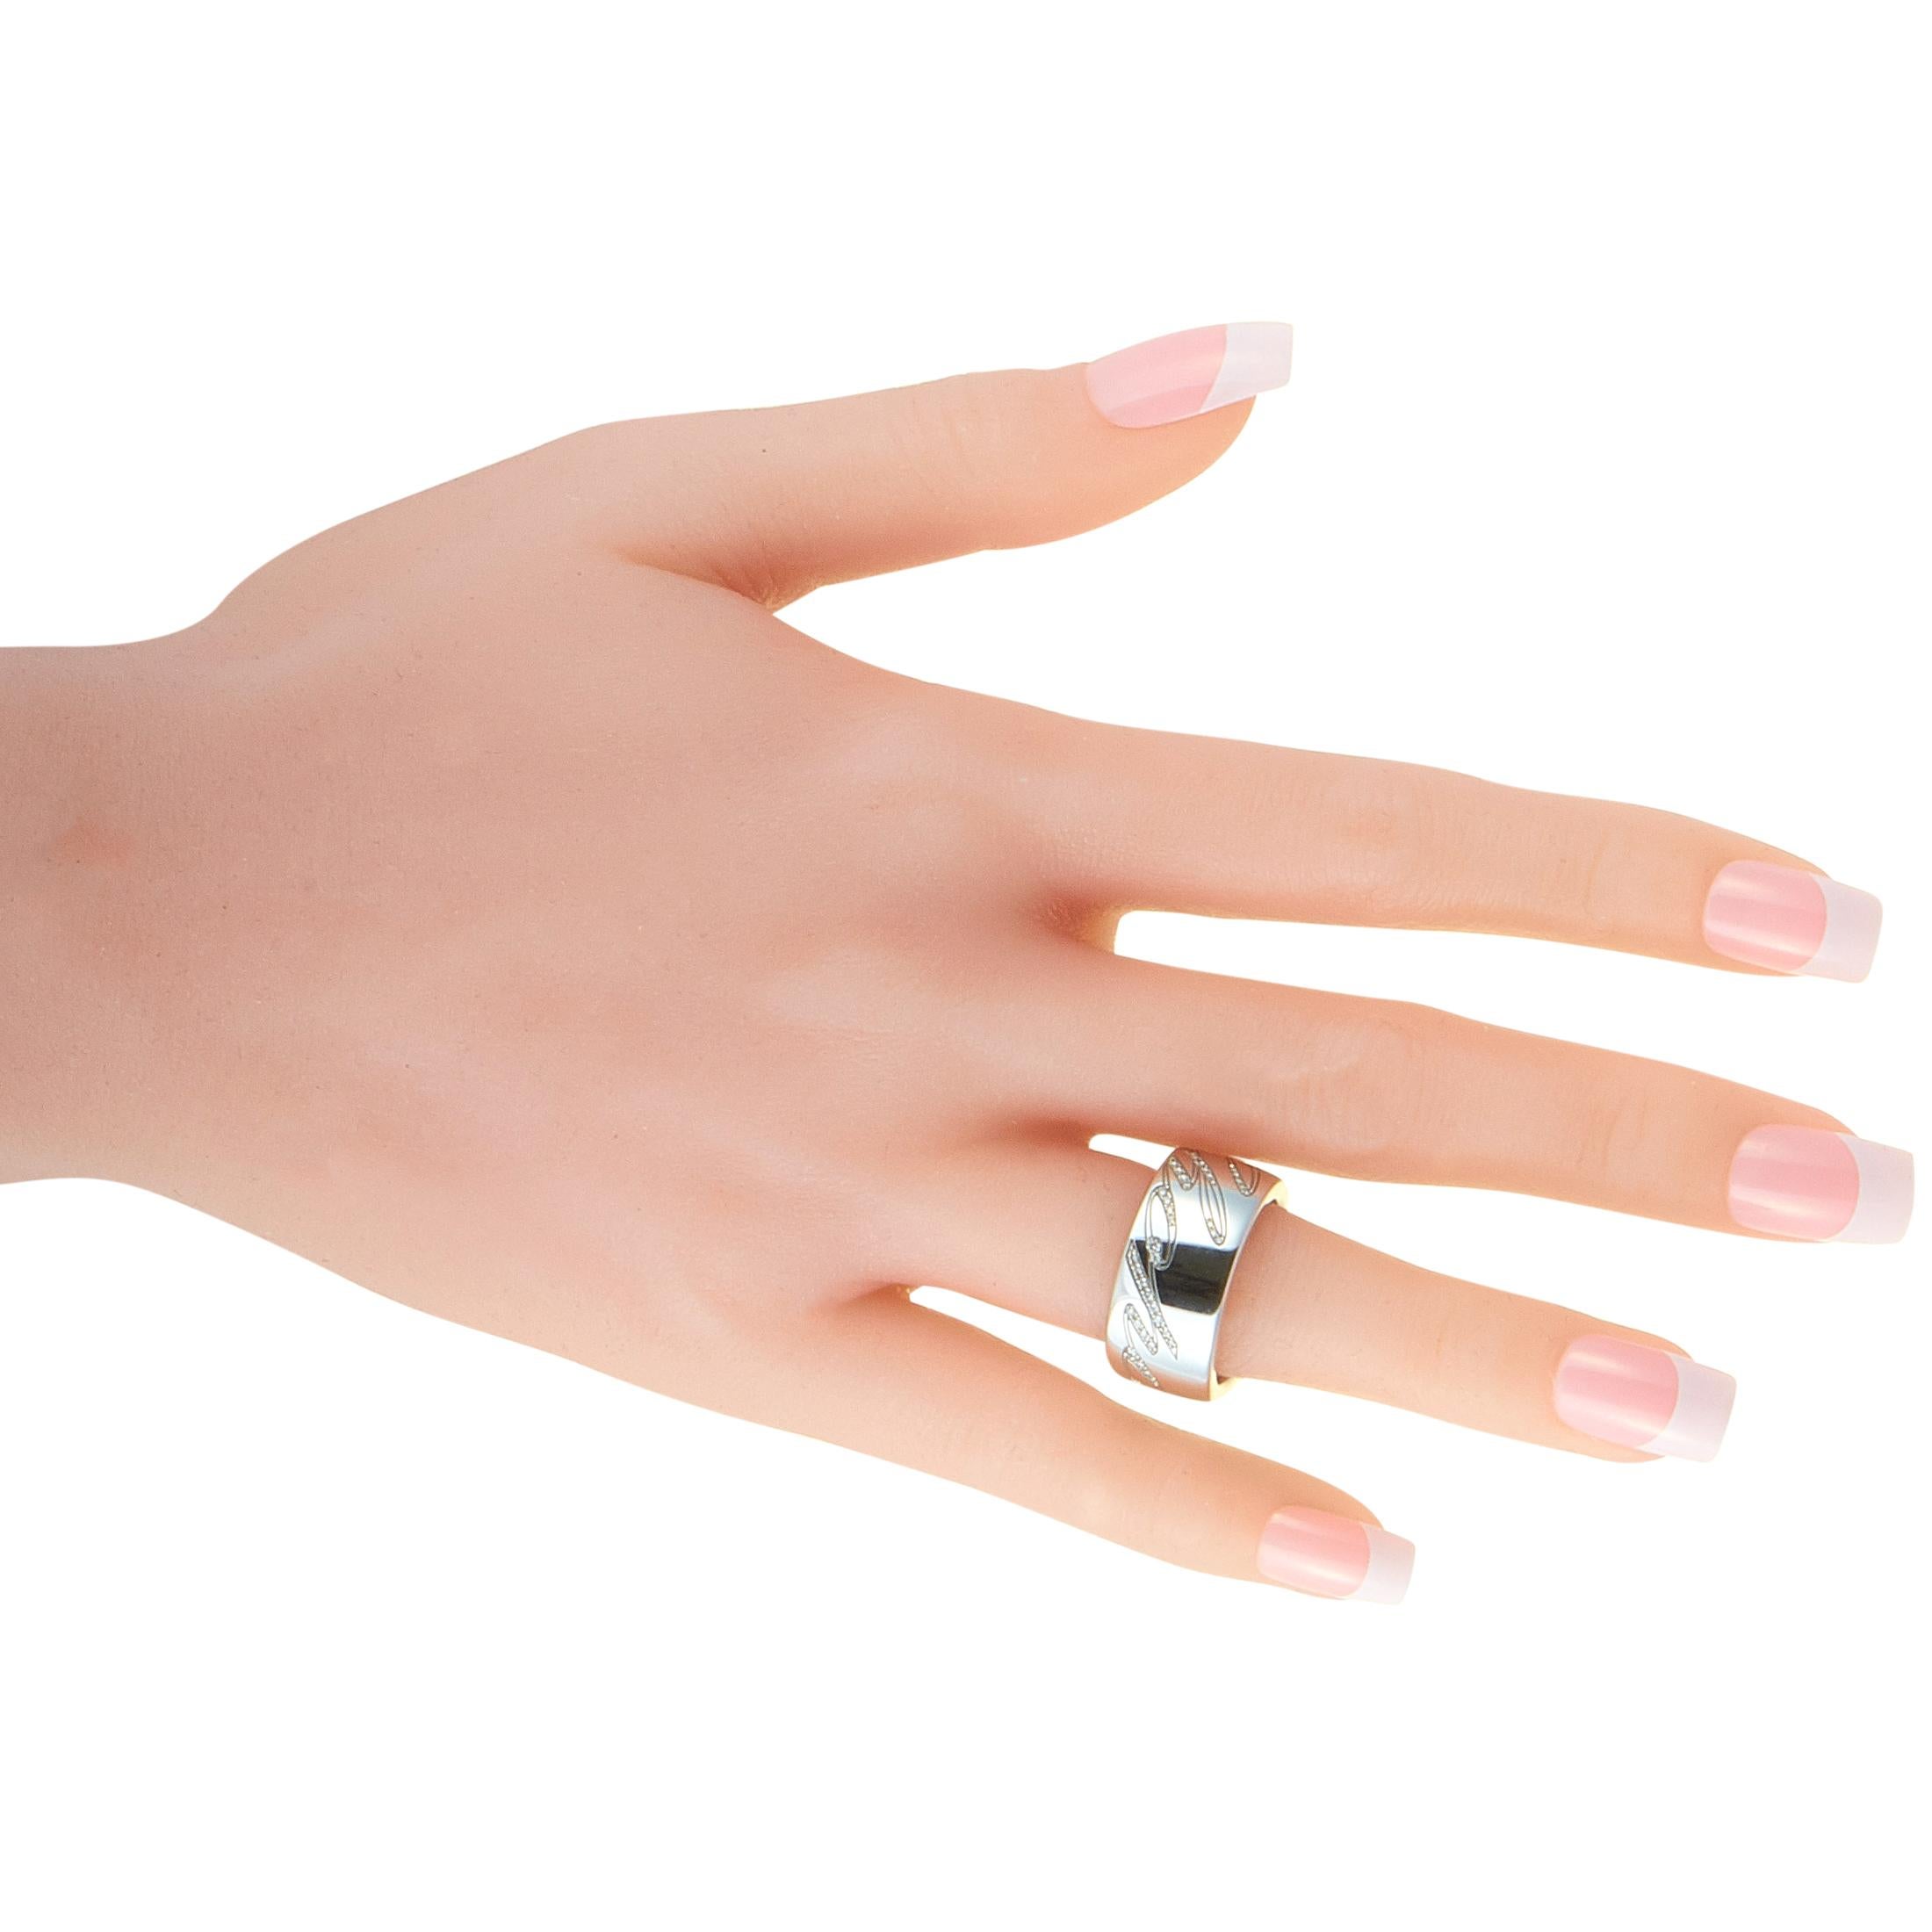 Women's Chopard Chopardissimo 18 Karat White Gold Diamond Signature Band Ring